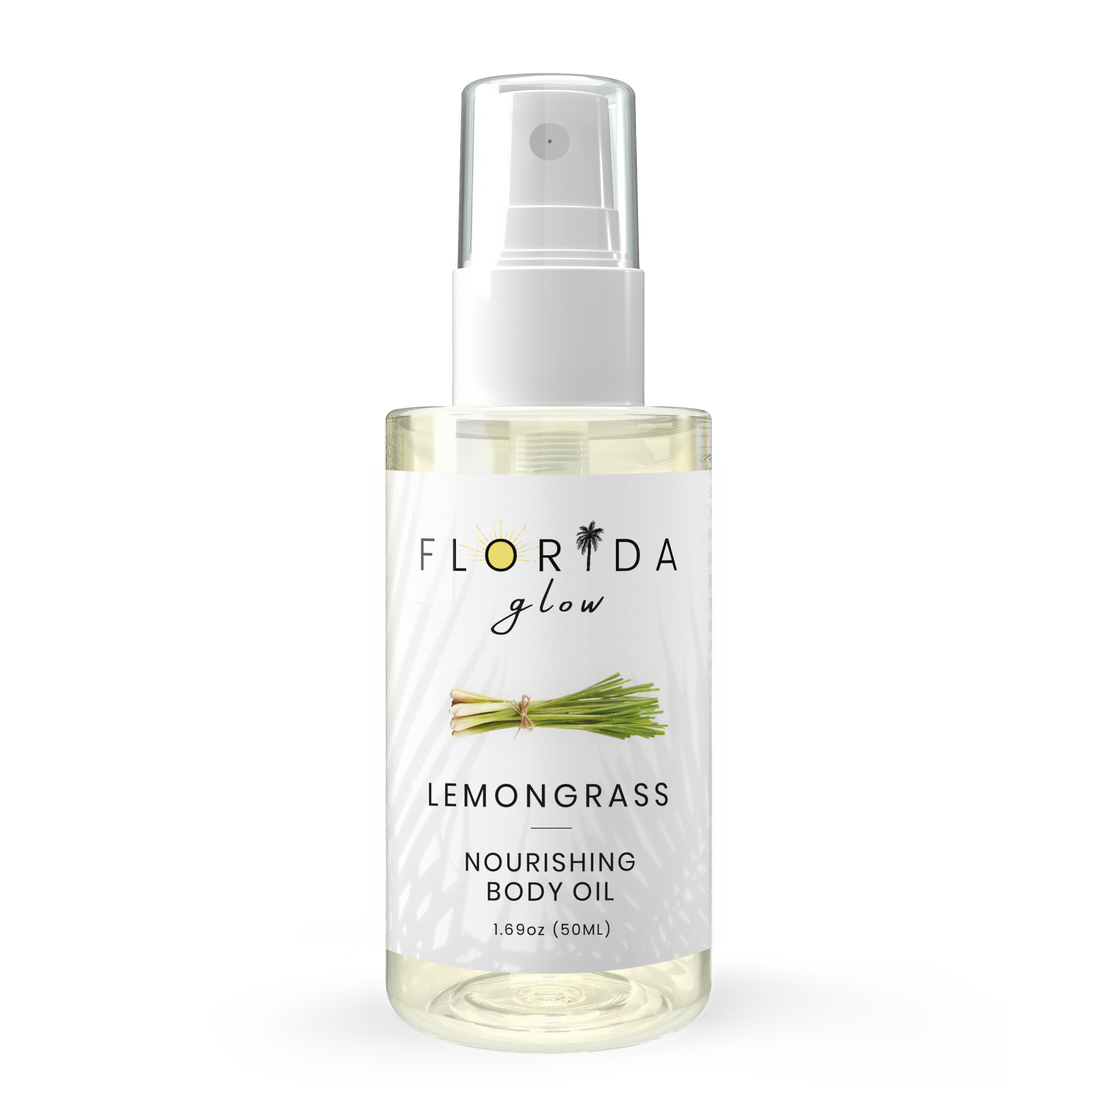 Lemongrass Florida Glow Body Oil